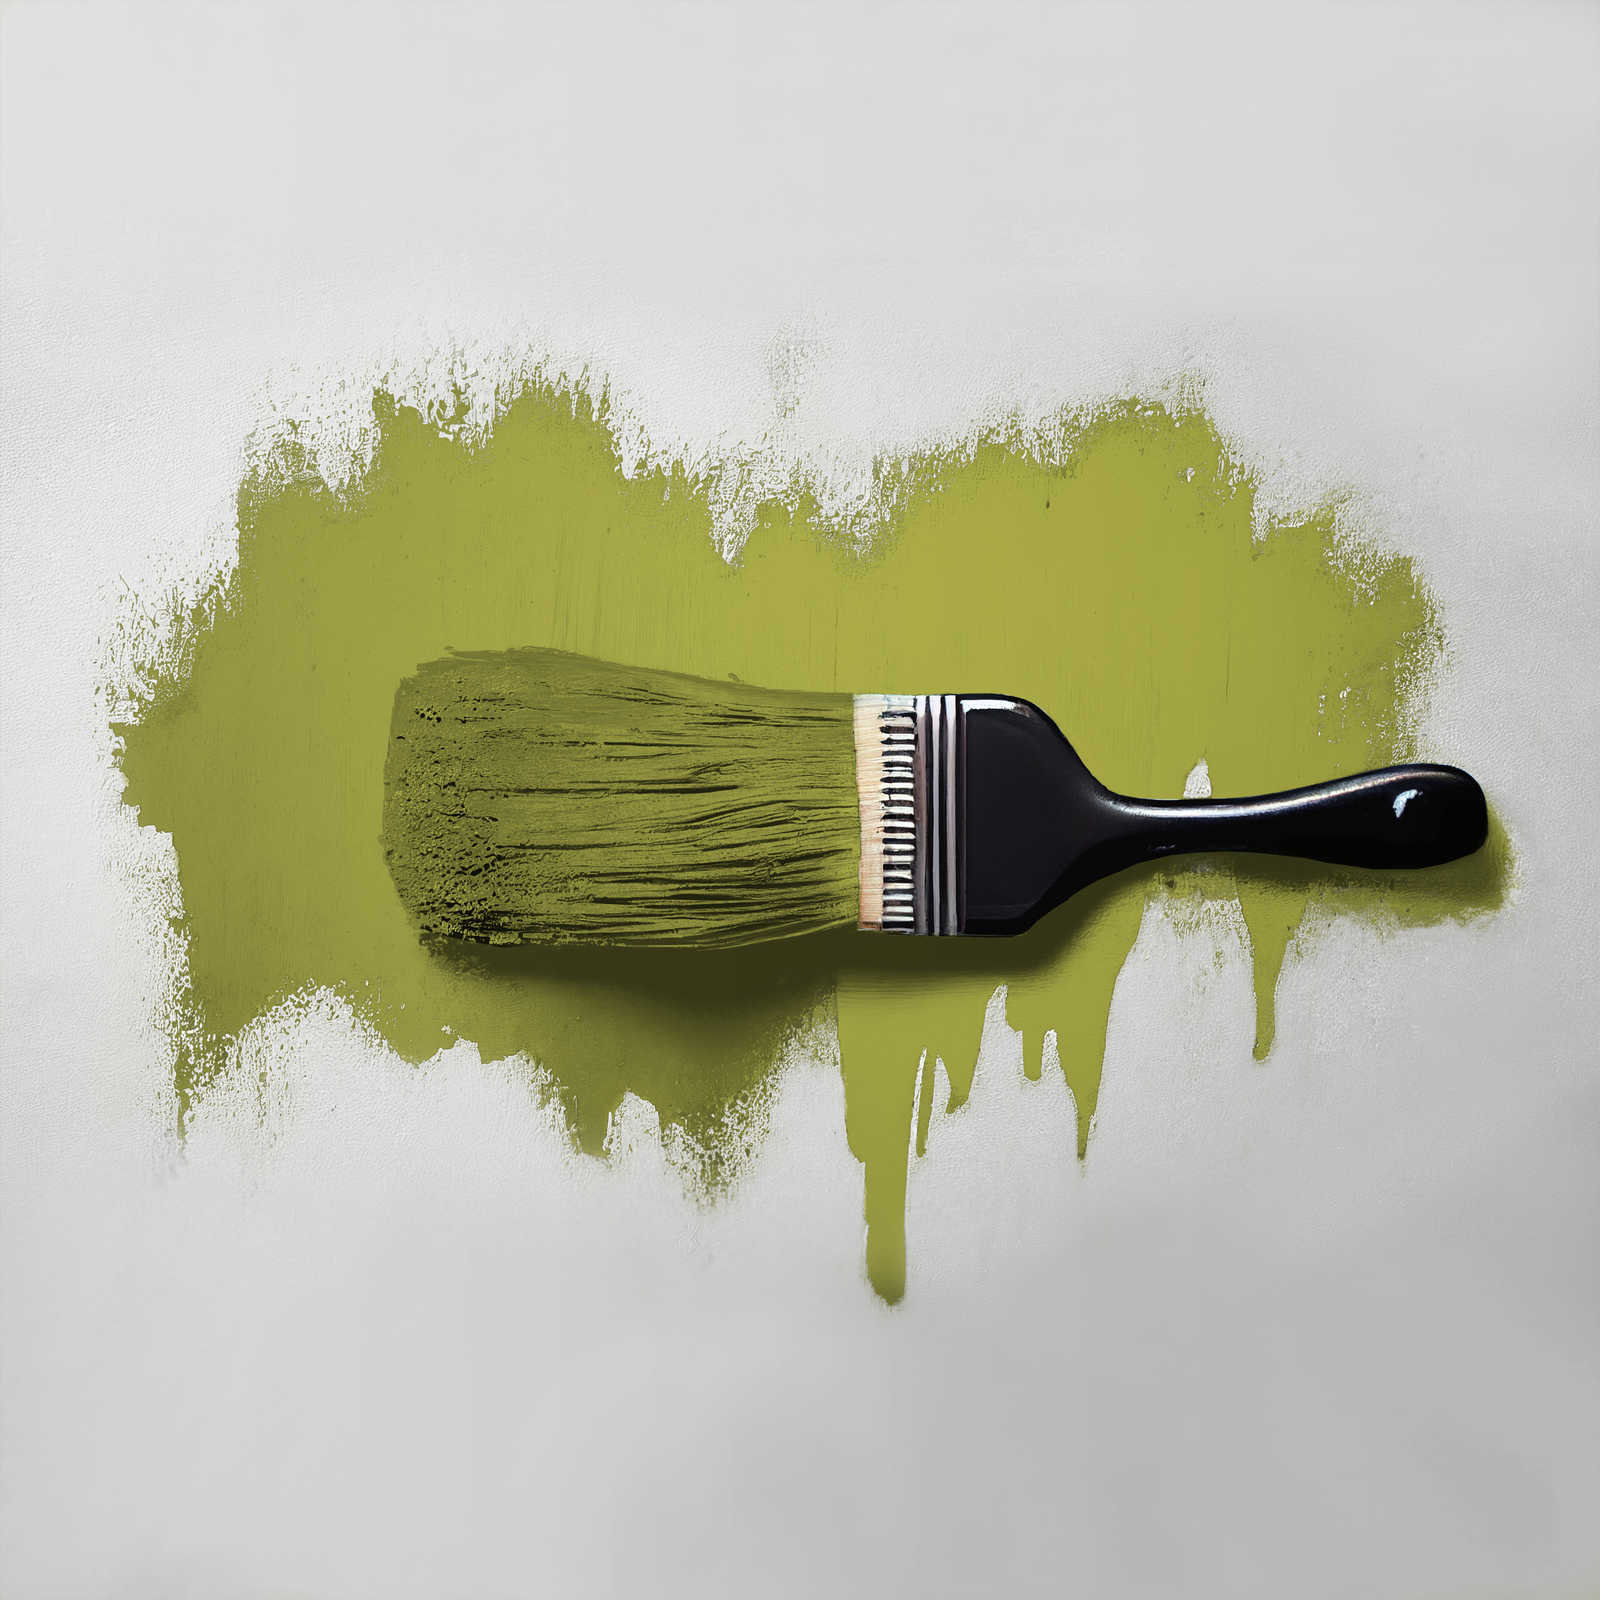             Pittura murale TCK4009 »Kitchy Kiwi« in giallo verde brillante – 5,0 litri
        